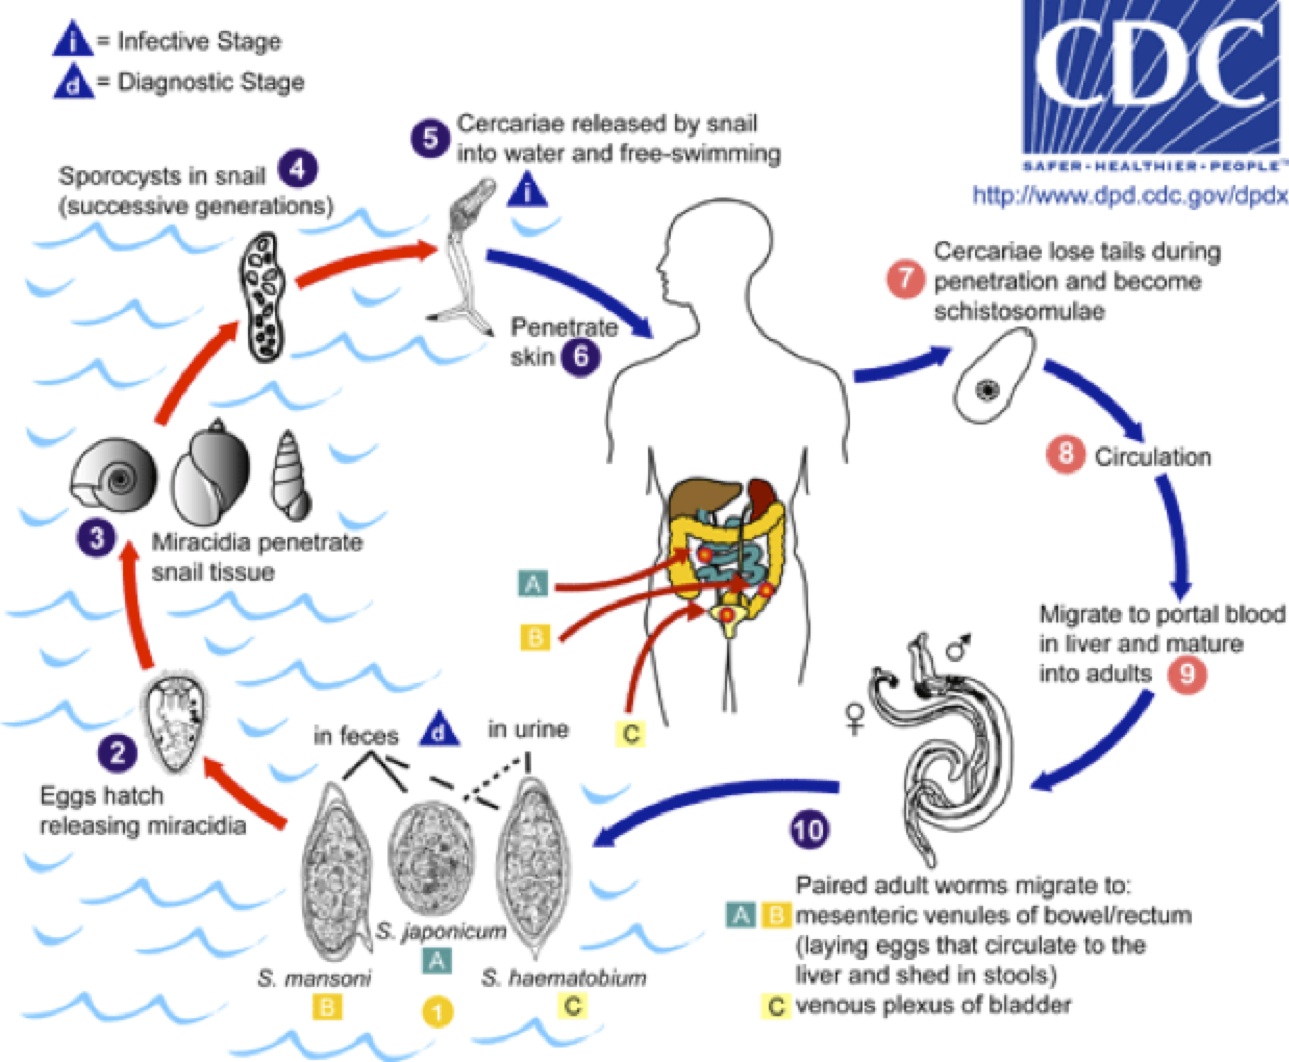 Human liver fluke infection, liver fluke life cycle, symptoms & treatment